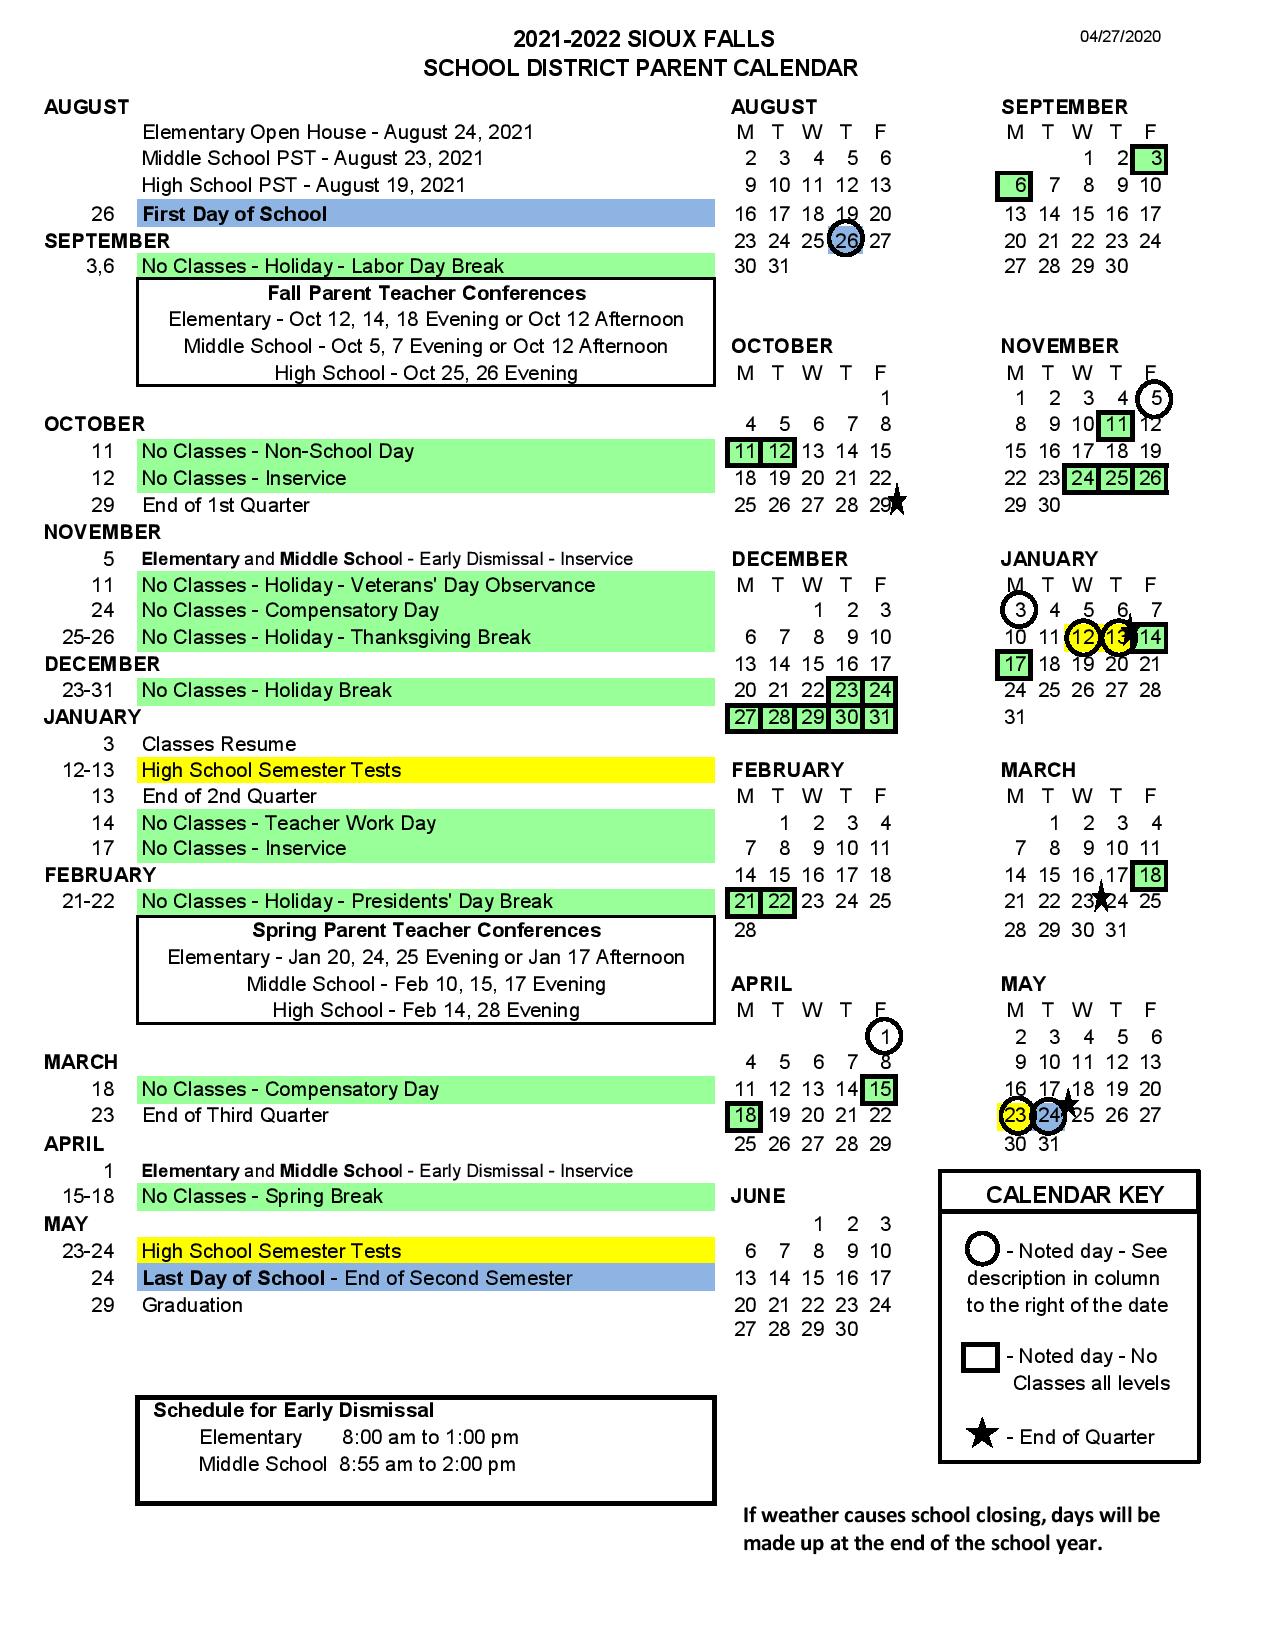 Sioux Falls School District Calendar 2024 25 Notre Dame Schedule 2024